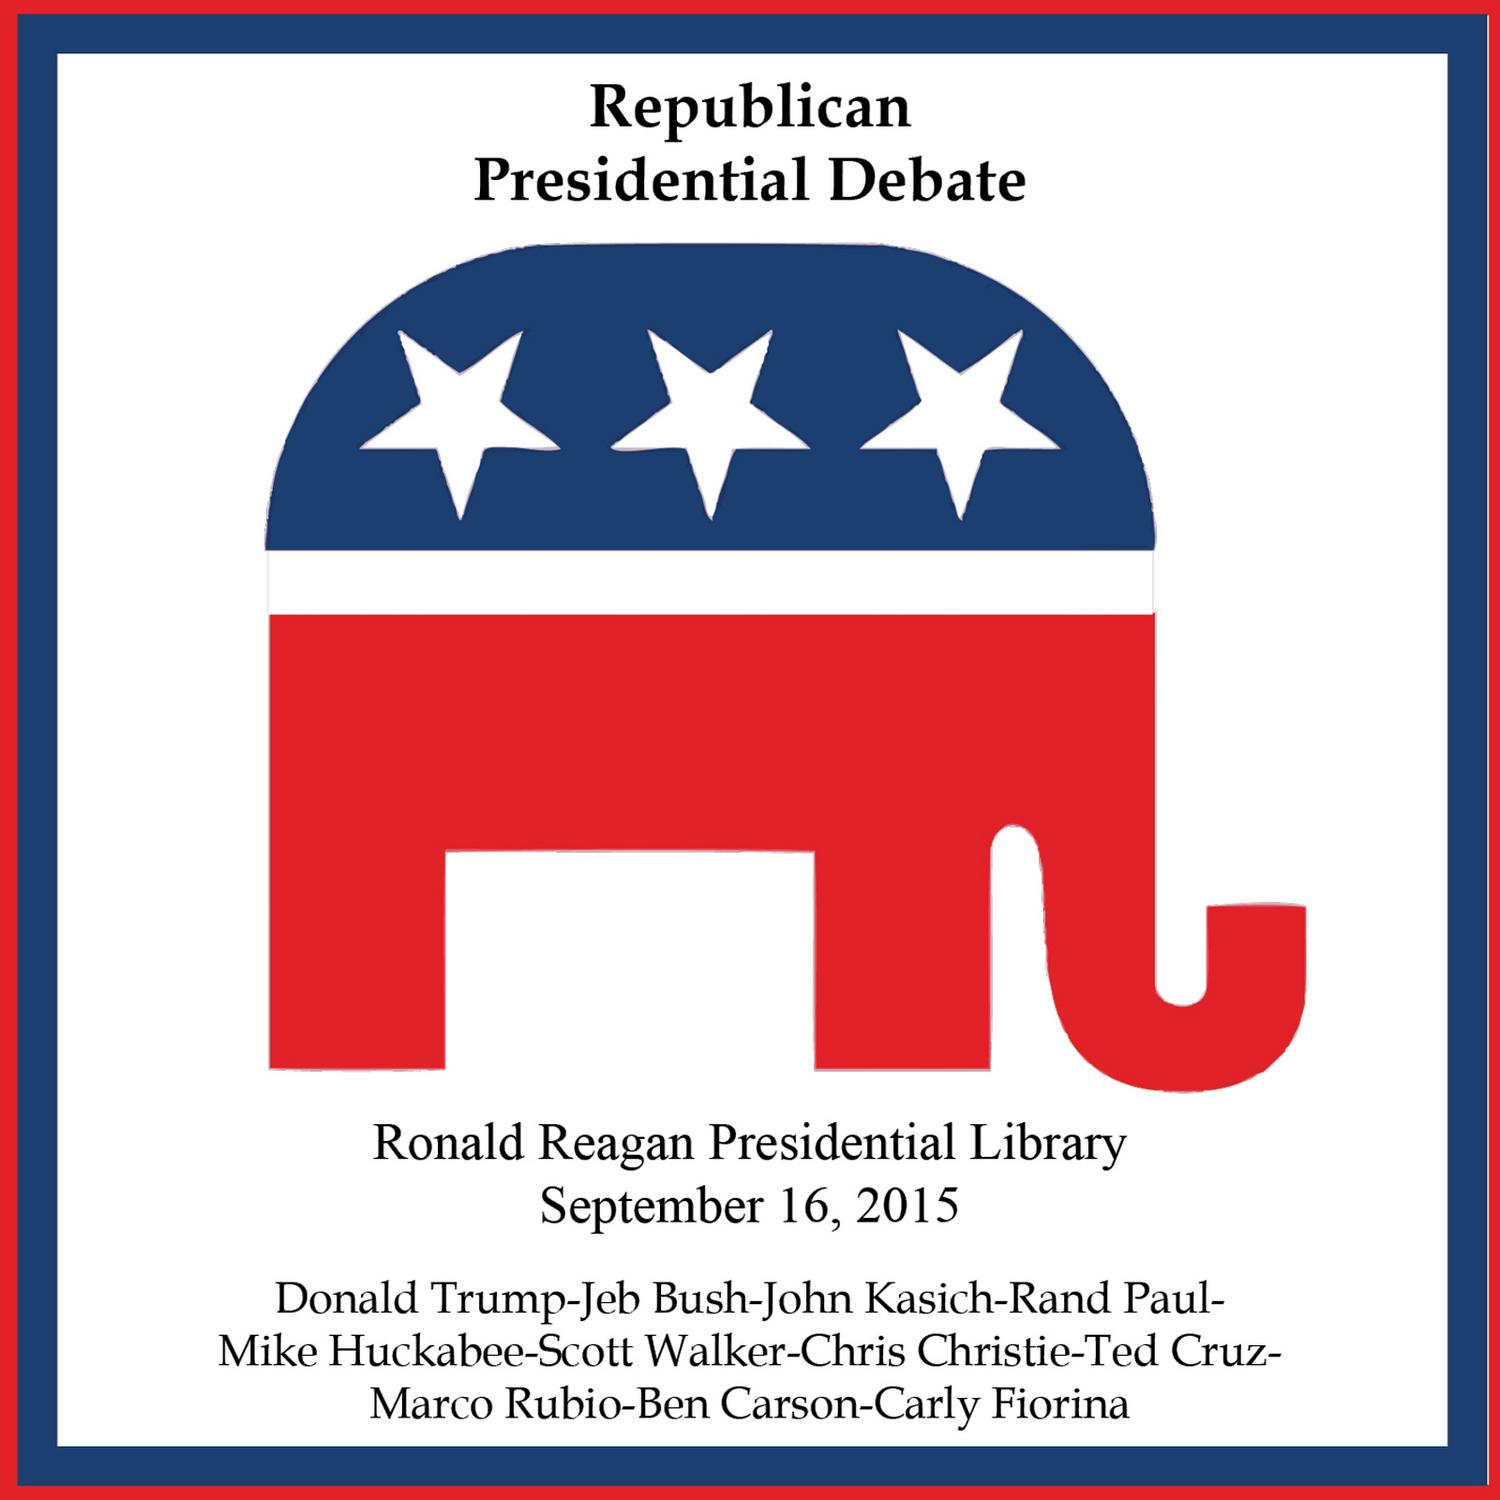 Republican Prime Time Presidential Debate #2 - Reagan Presidential Library - September 16, 2015